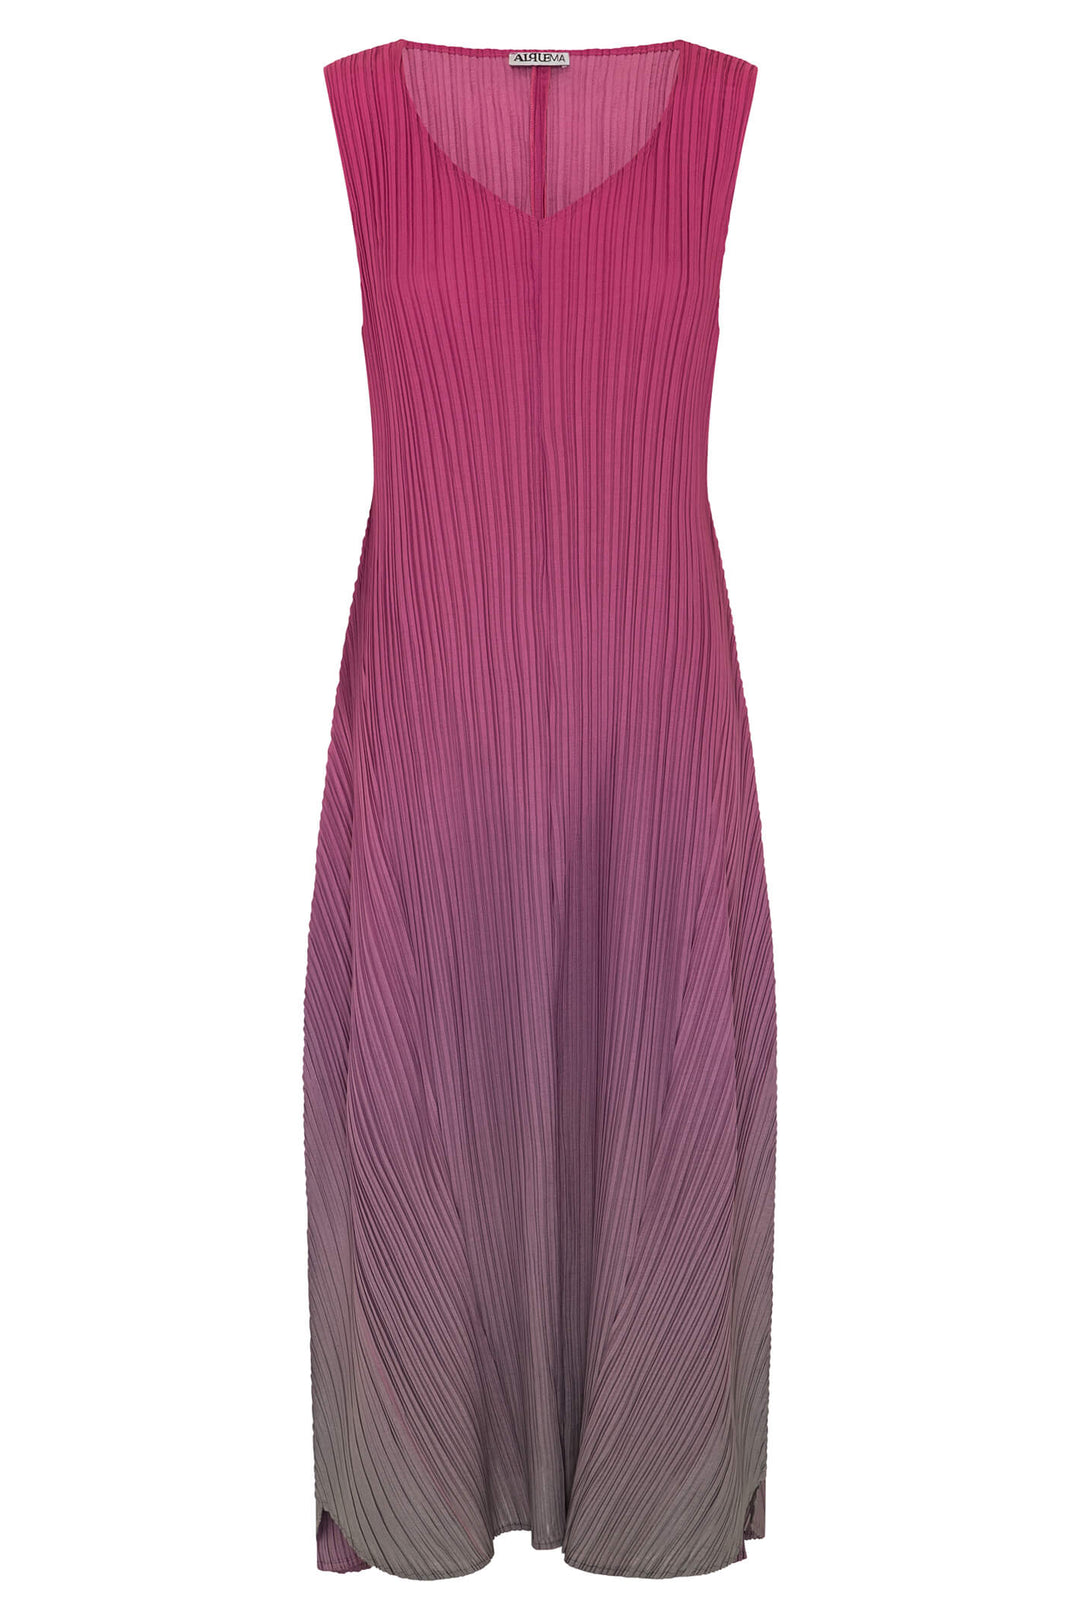 Alquema AD1072L Estrella Fuchsia Ombre Dress